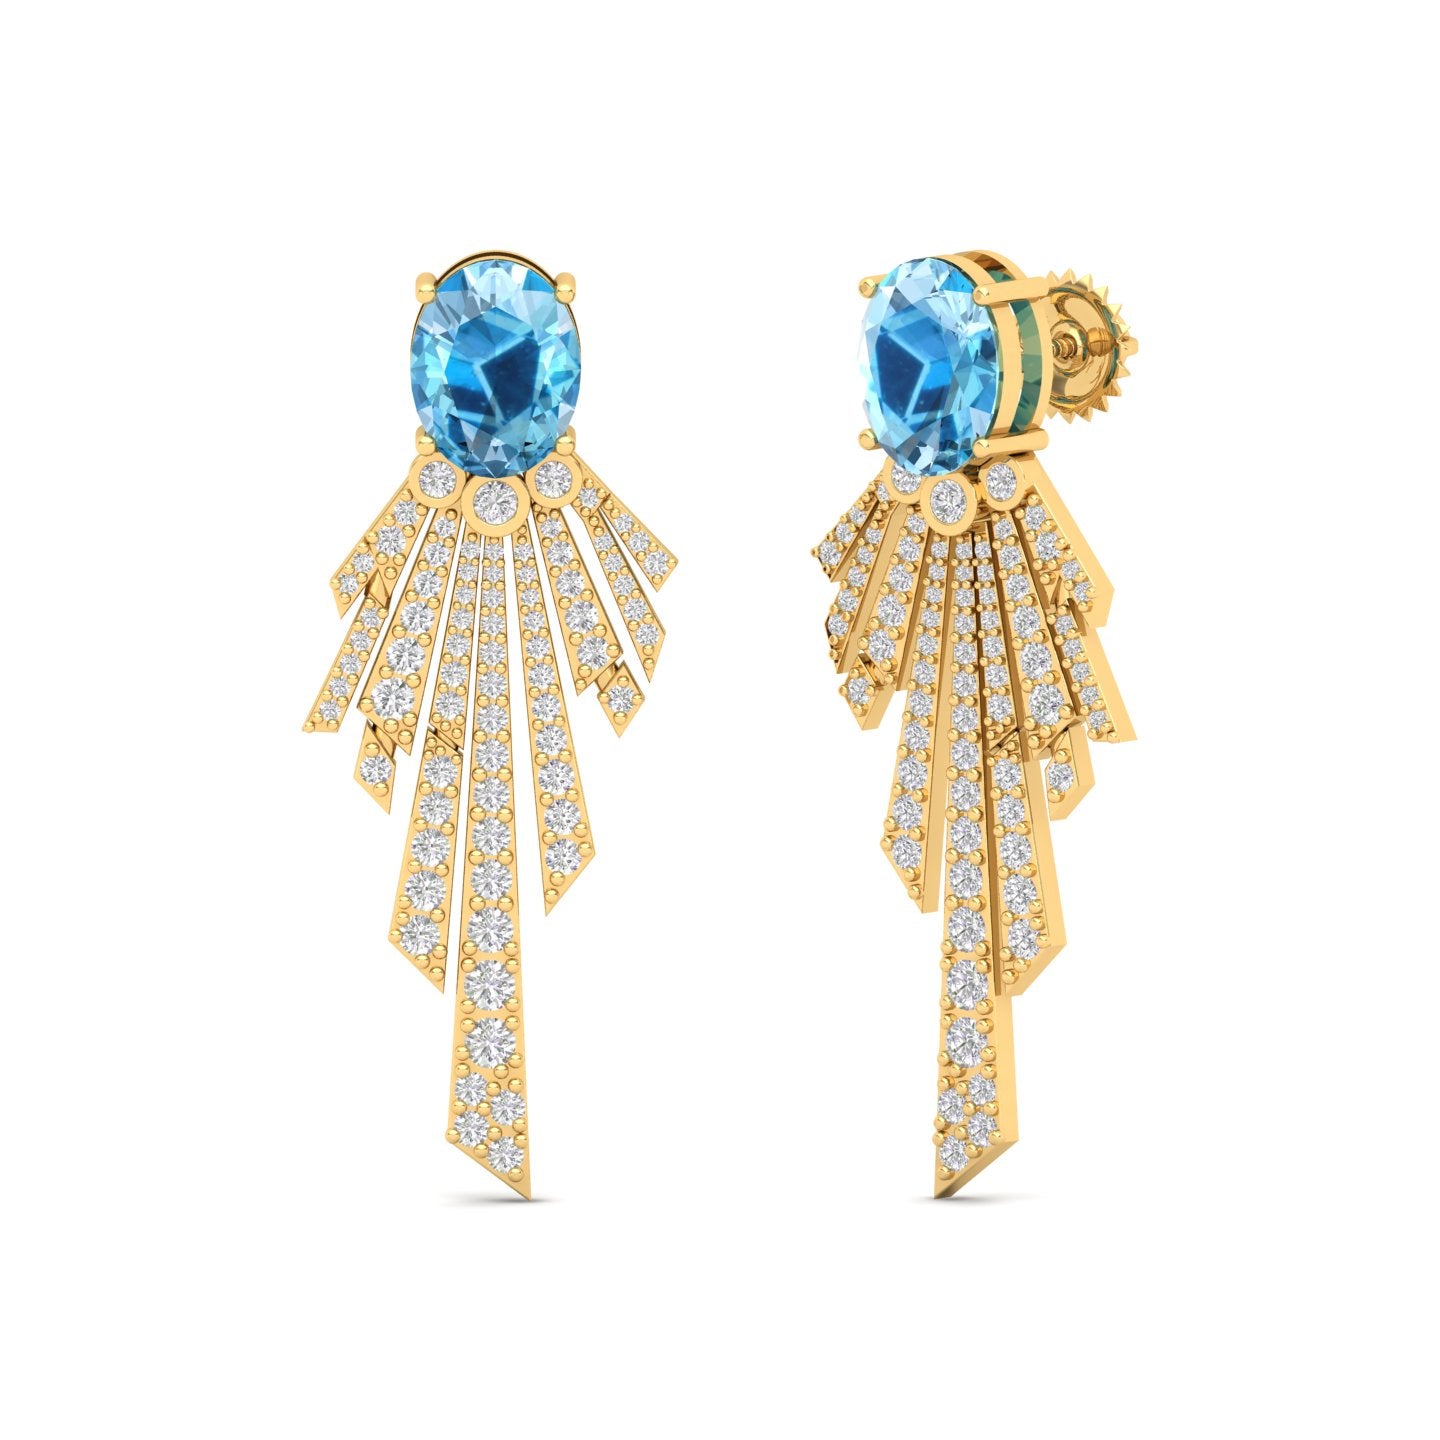 Maurya Blue Topaz Pyre Fashion Earrings with Pave Set Diamonds